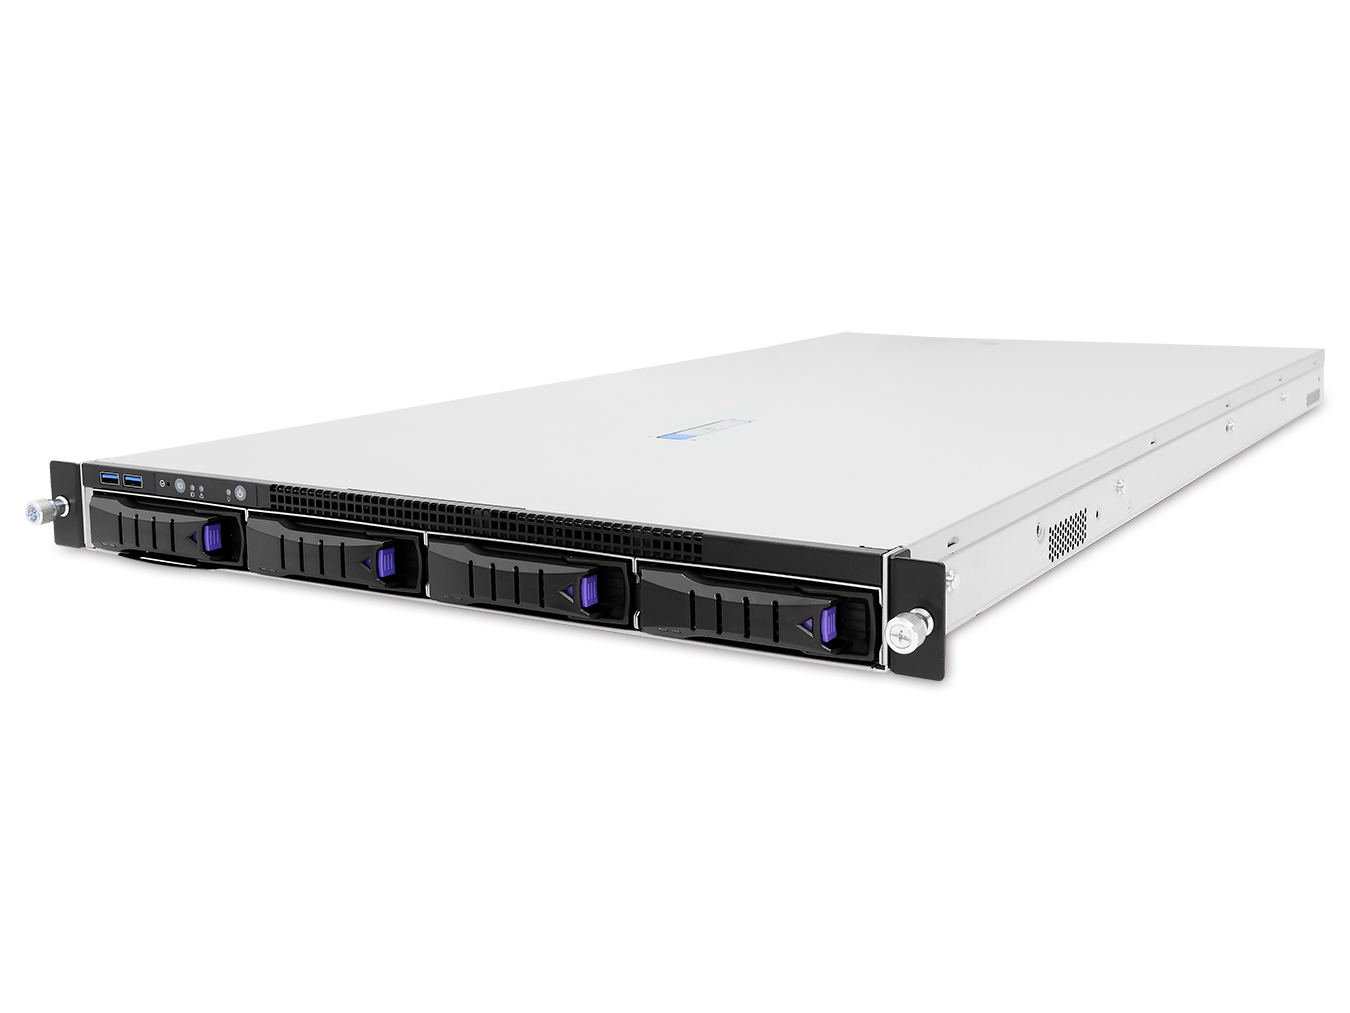 Серверная платформа AIC SB101-A6 (XP1-S101A602)